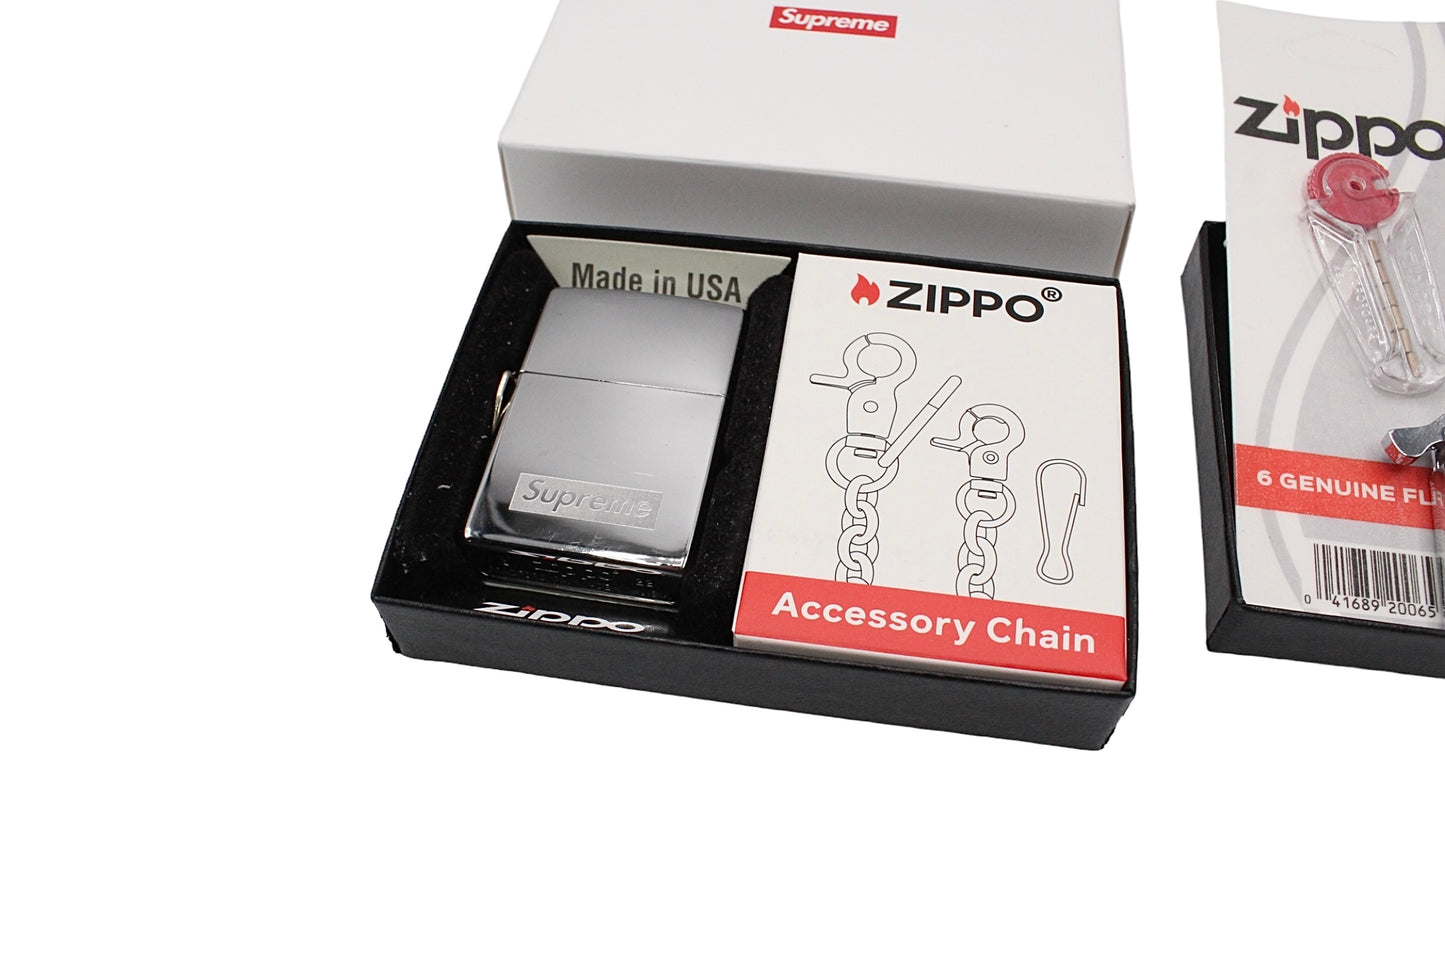 Supreme Zippo Lighter and Accessories